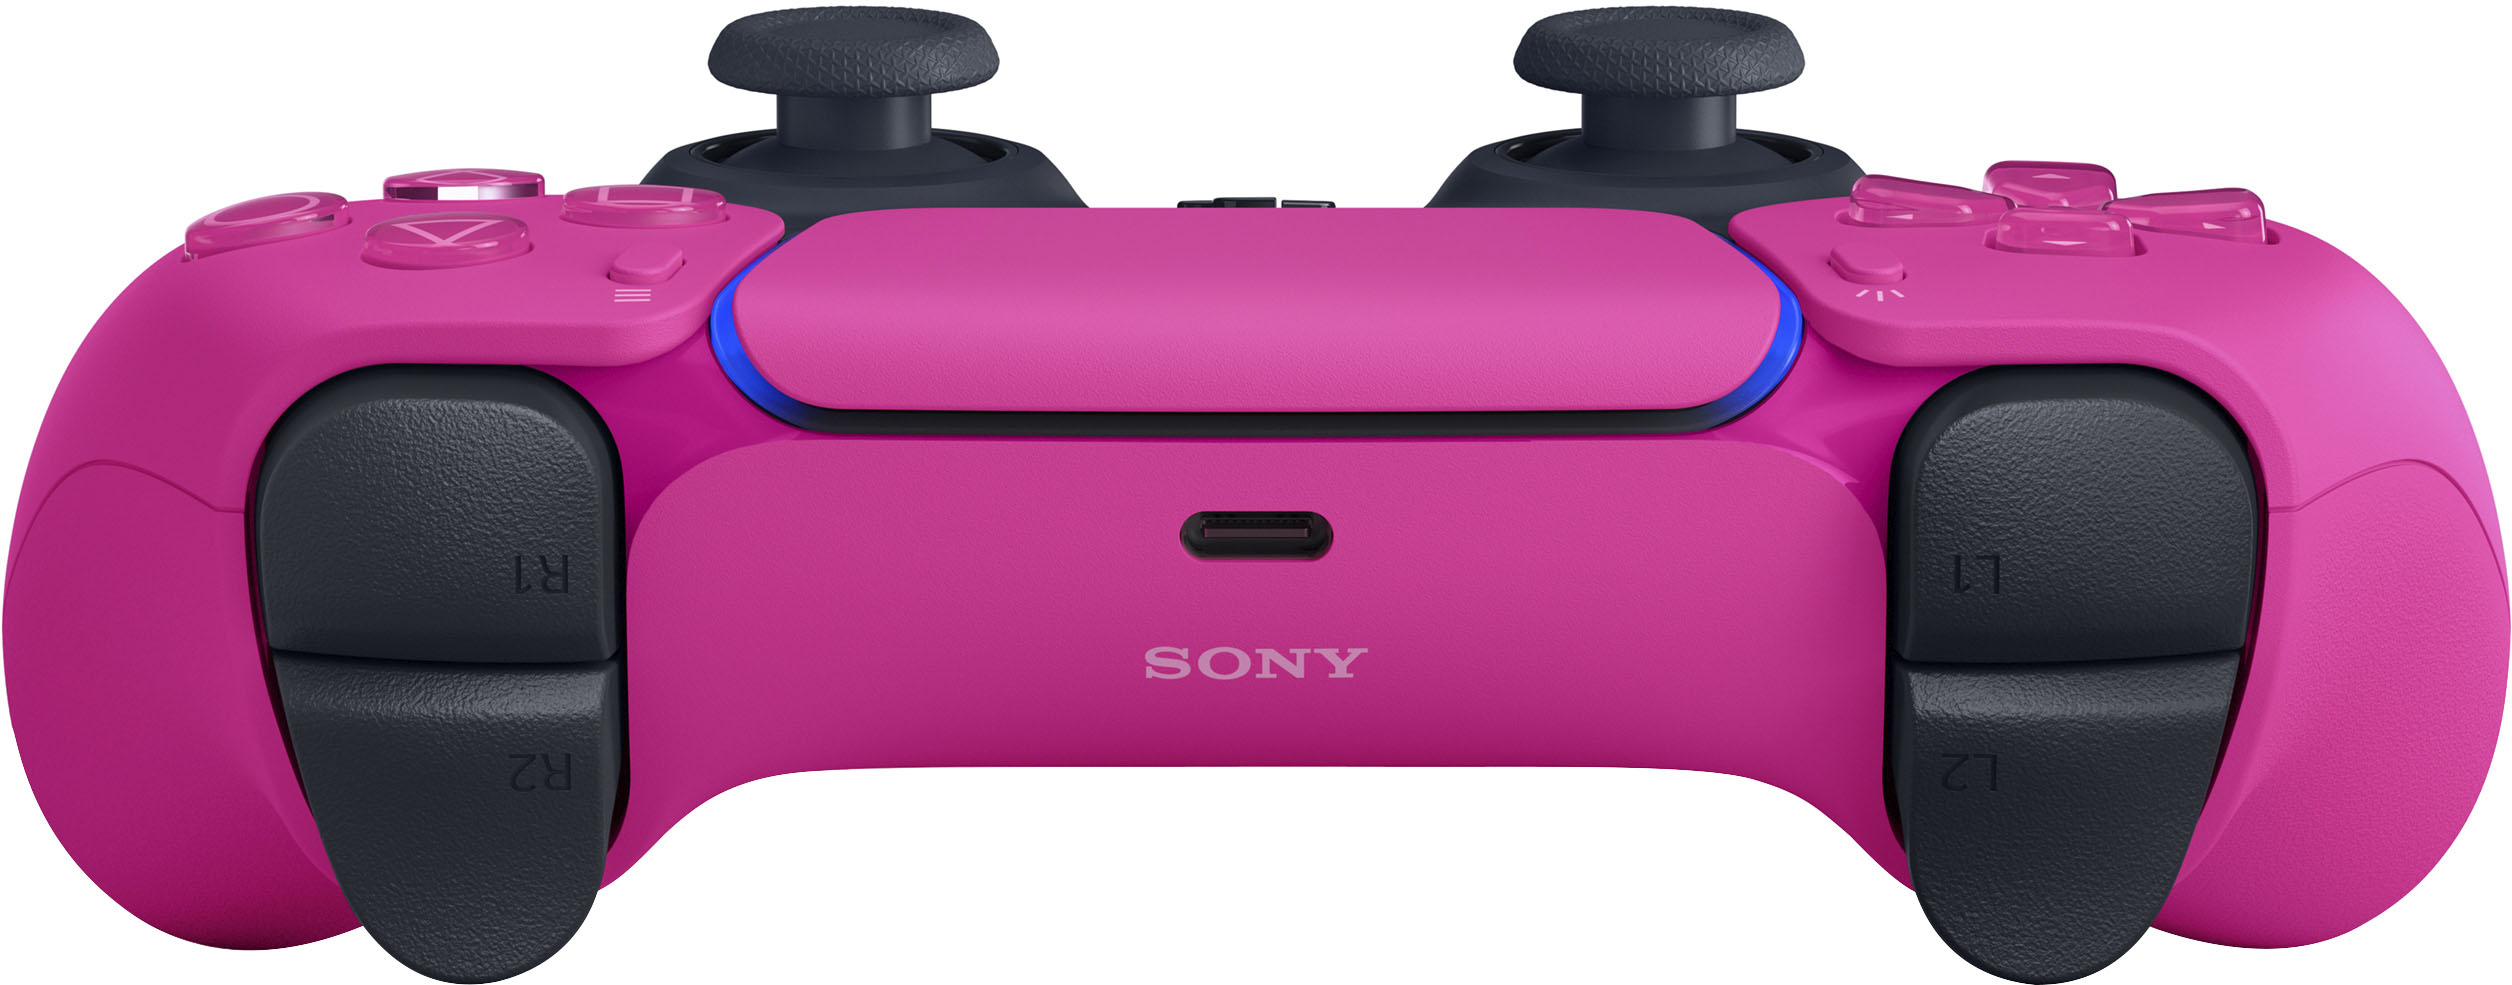 Sony PlayStation 5 DualSense Wireless Controller White 3005715 - Best Buy